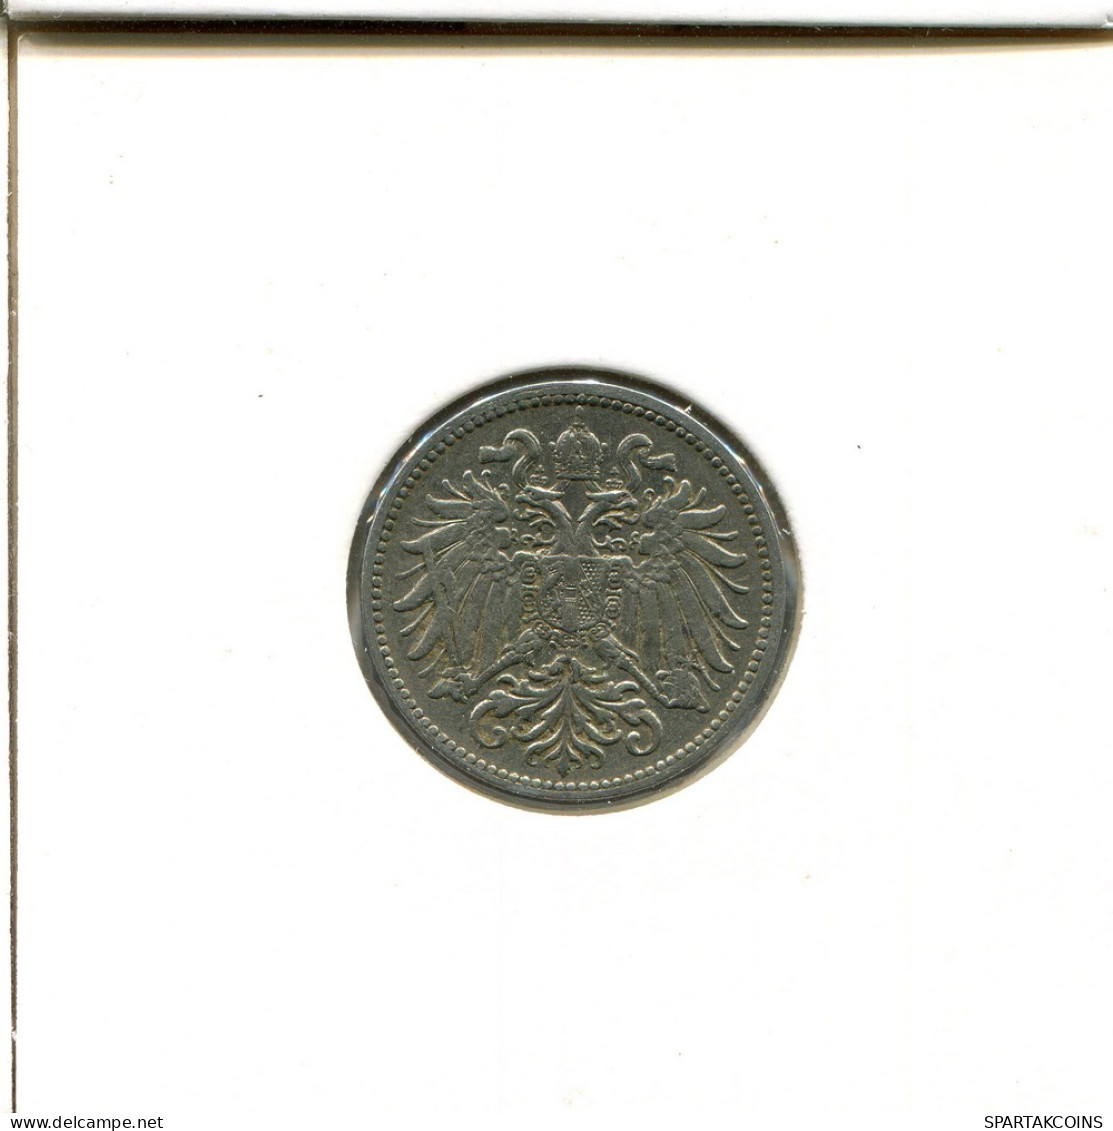 10 HELLER 1910 AUSTRIA Coin #AT523.U.A - Autriche